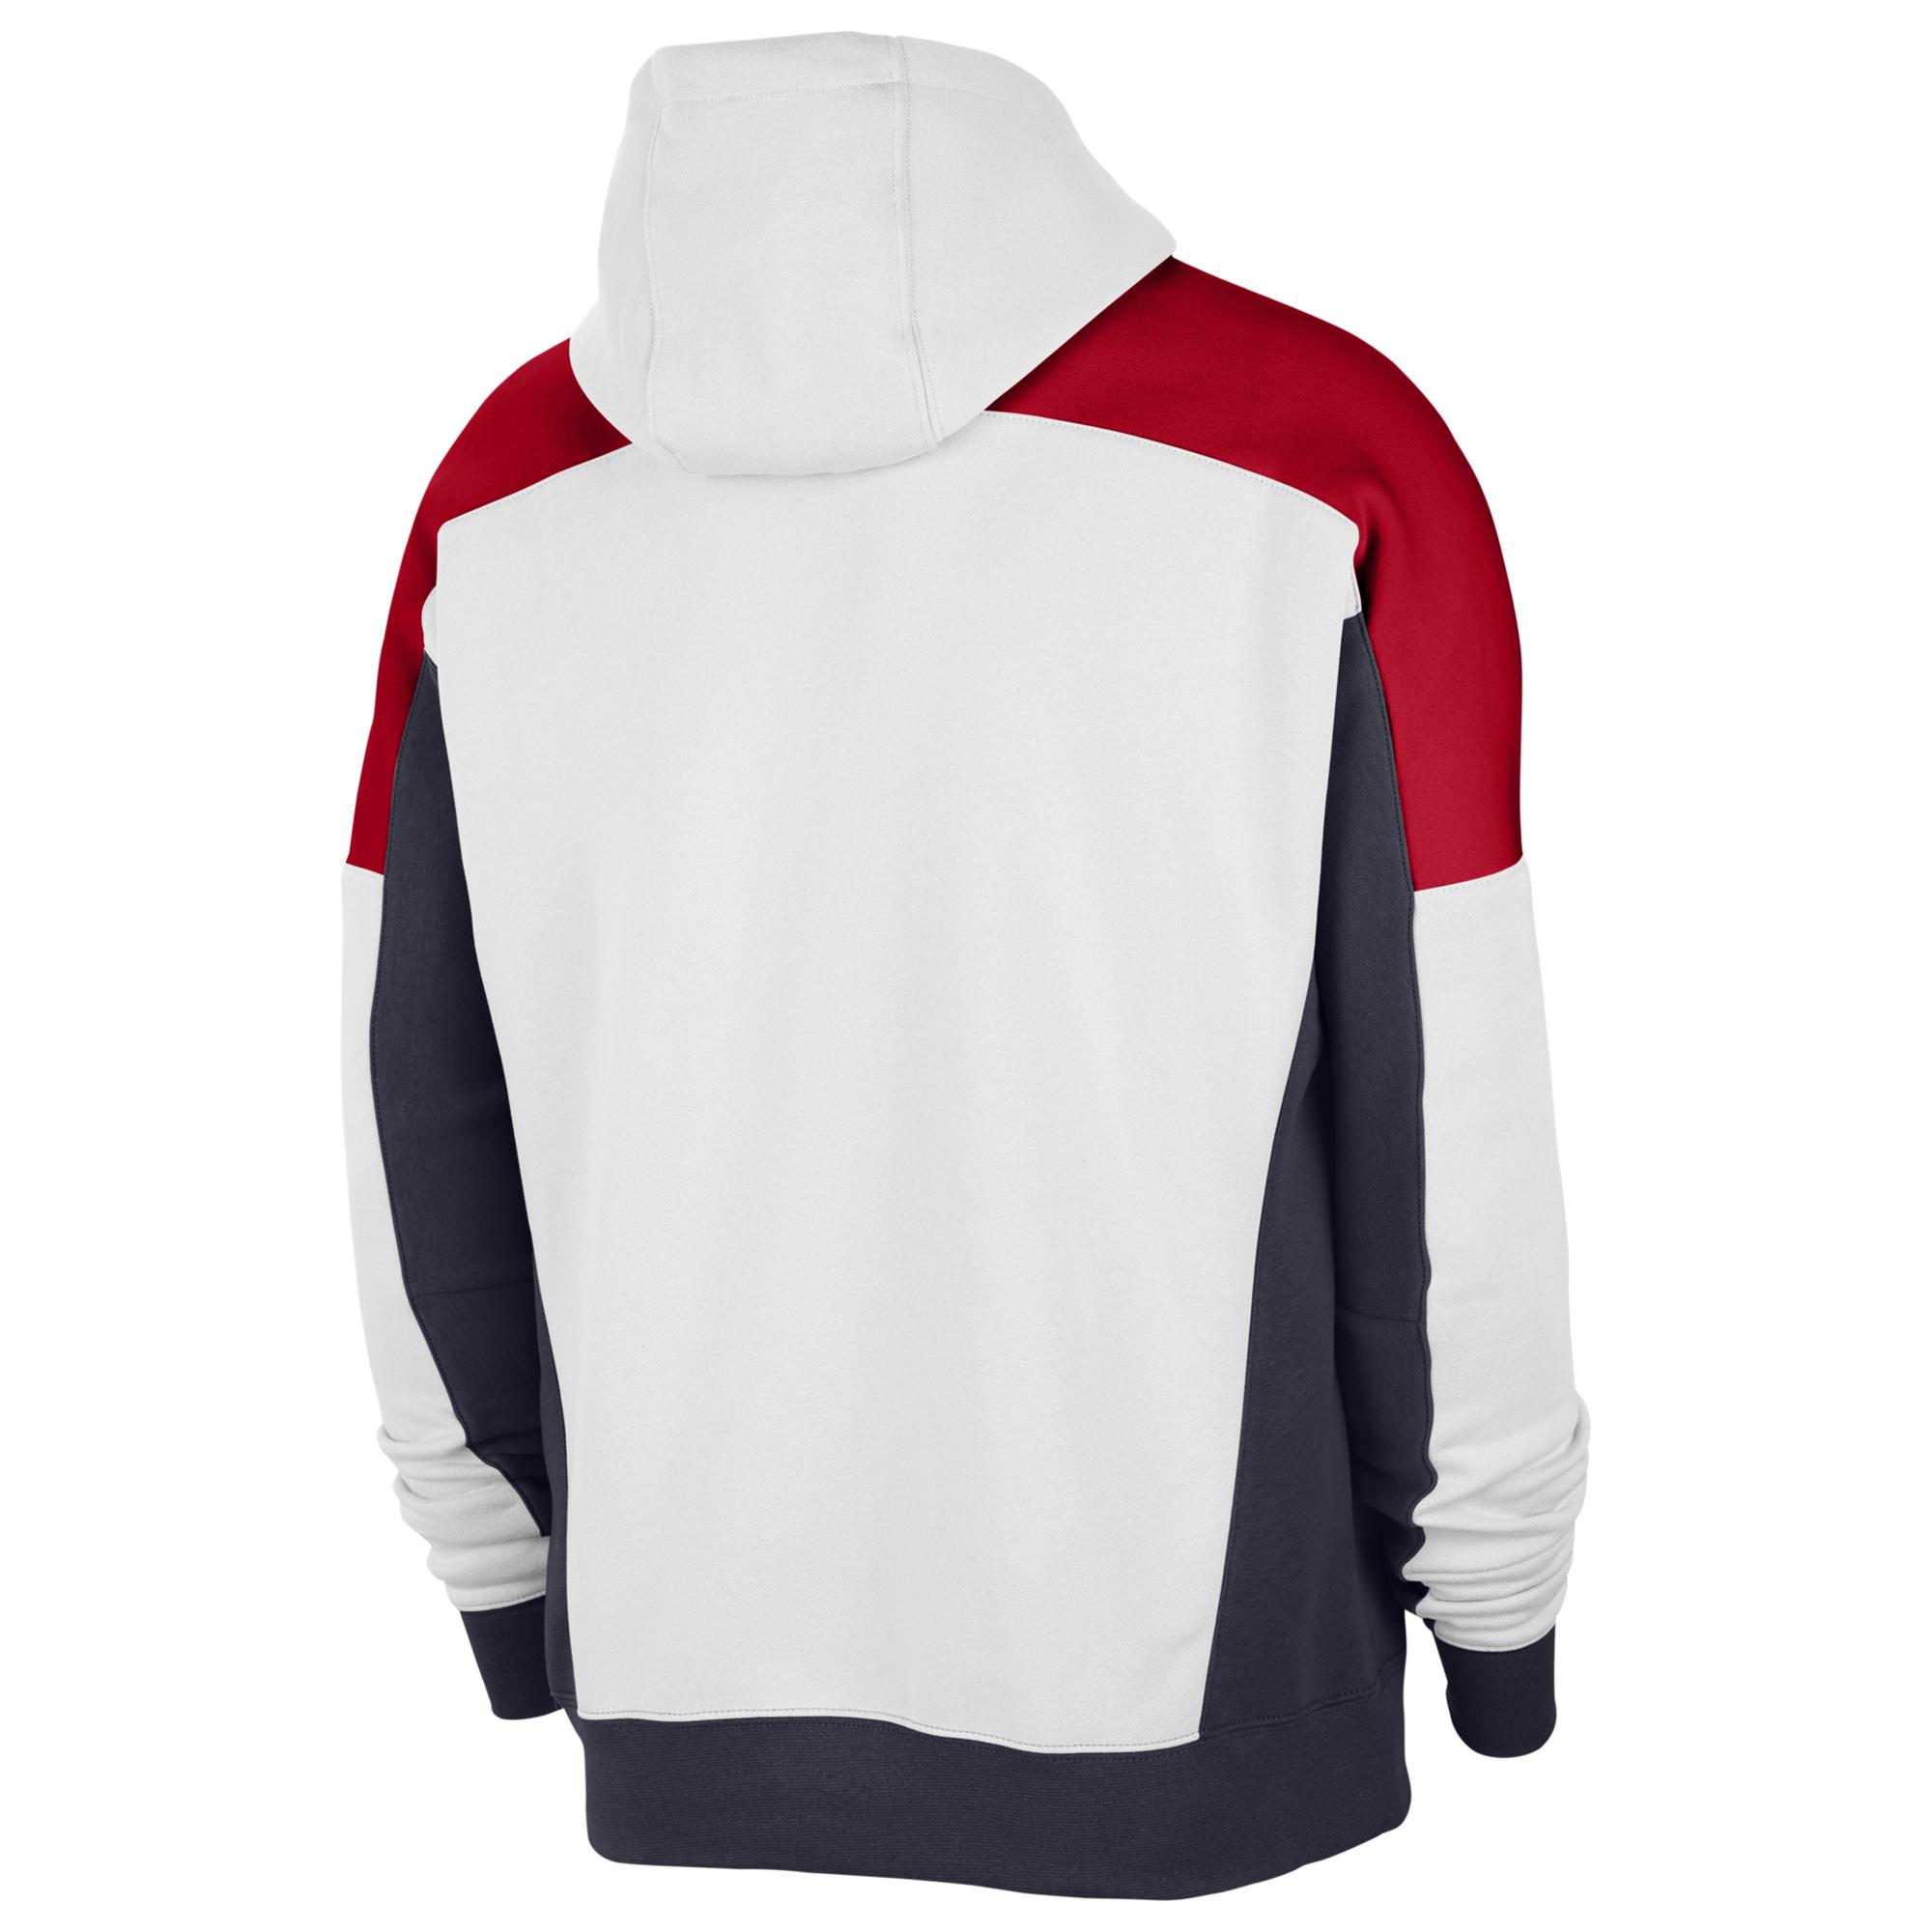 Nike Fleece Colorblock Pullover Hoodie in Red for Men - Lyst